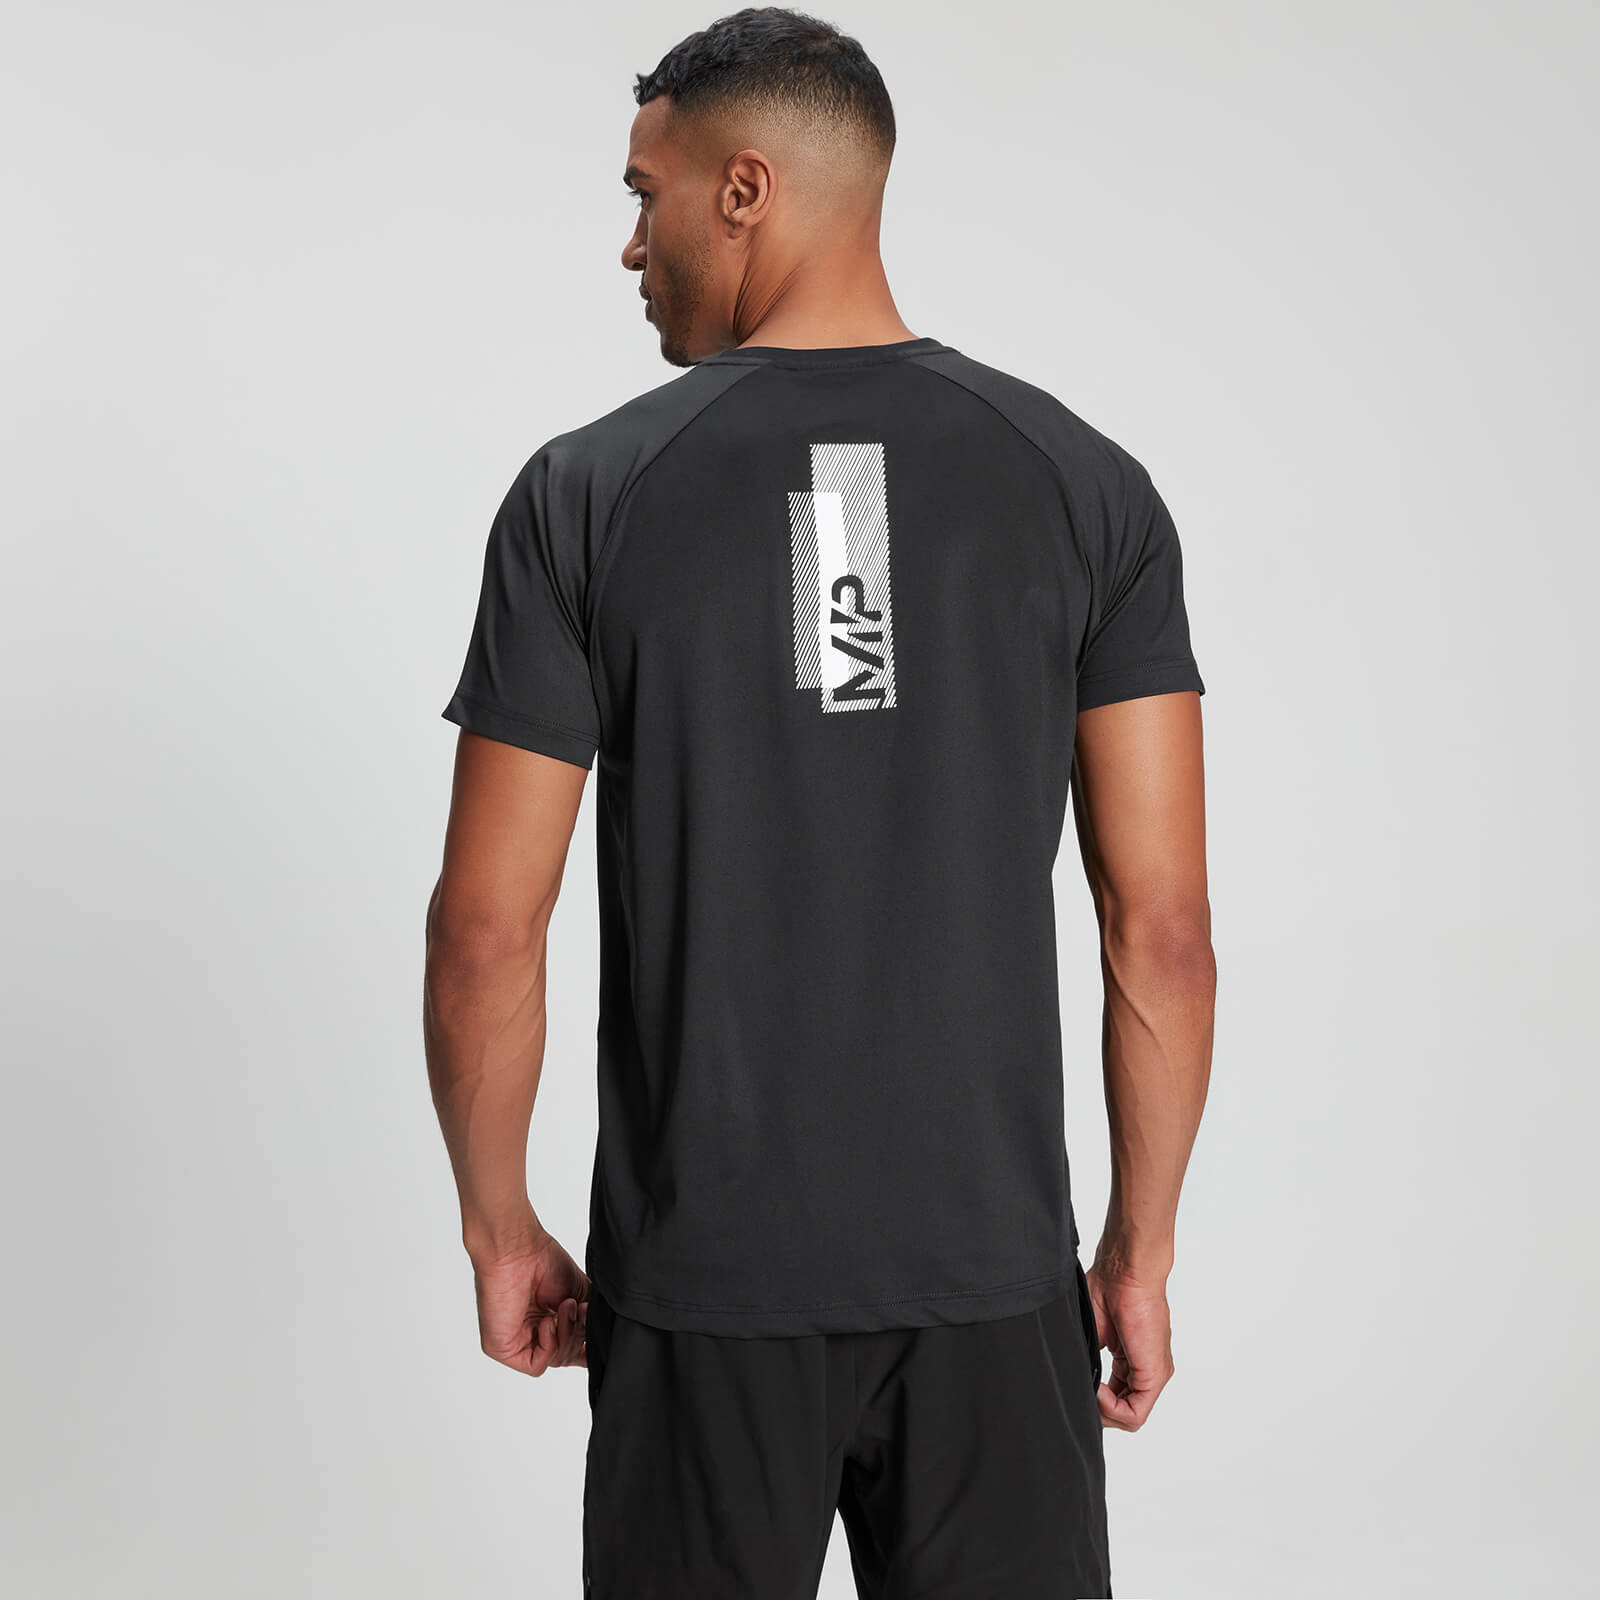 Myprotein T-shirt sportiva stampata a maniche corte da uomo - Nera - S